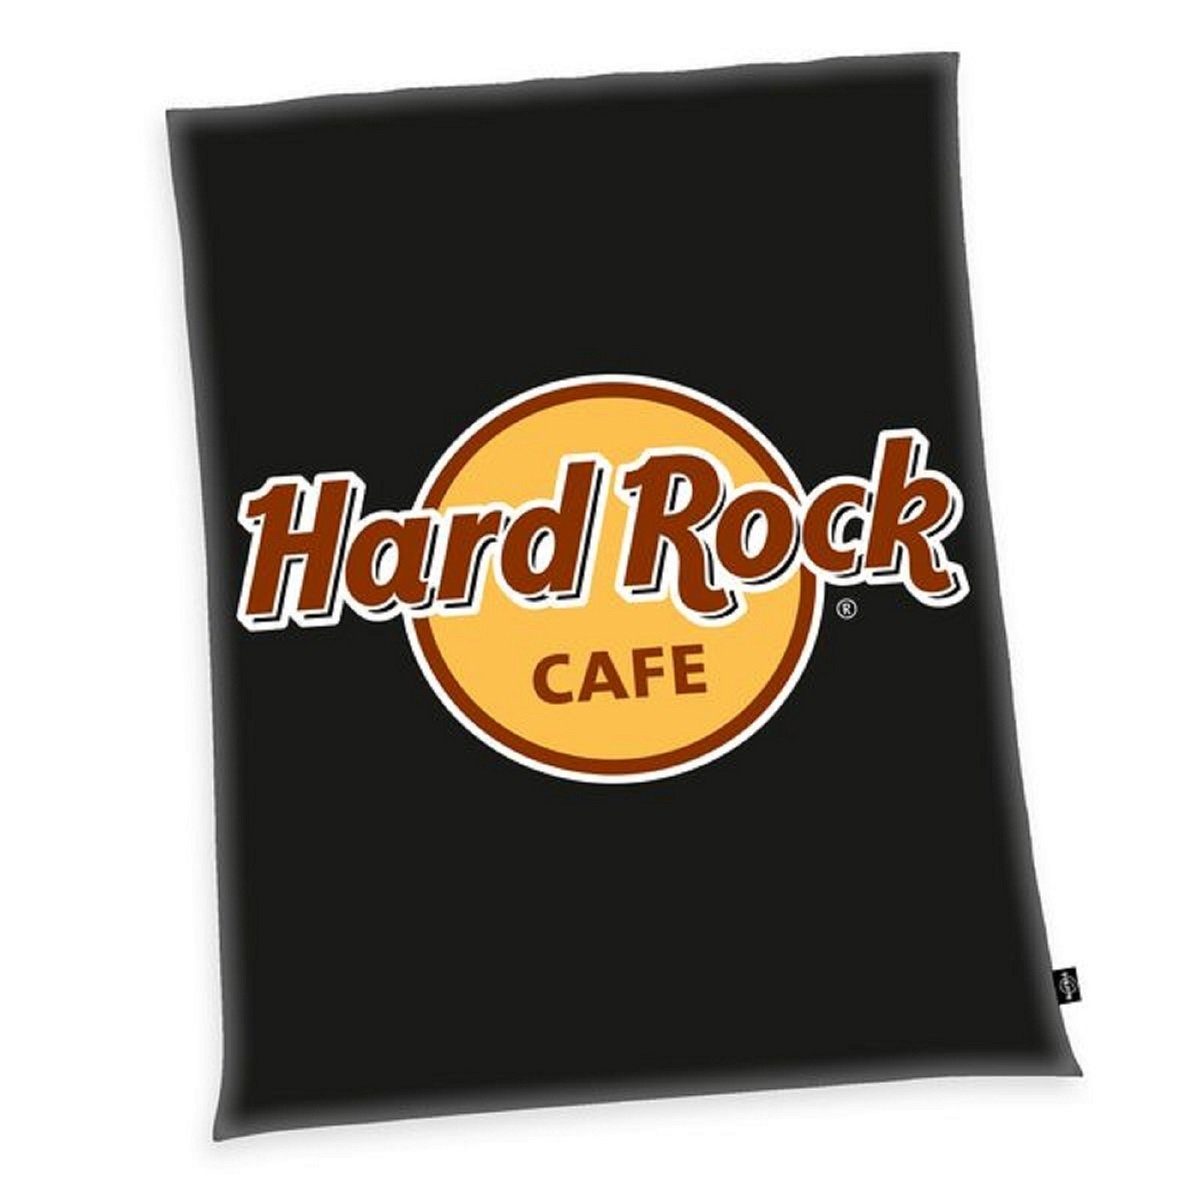 cm, Wellsoft Hard x 150 Wohndecke Herding Rock 200 Flauschdecke Cafe